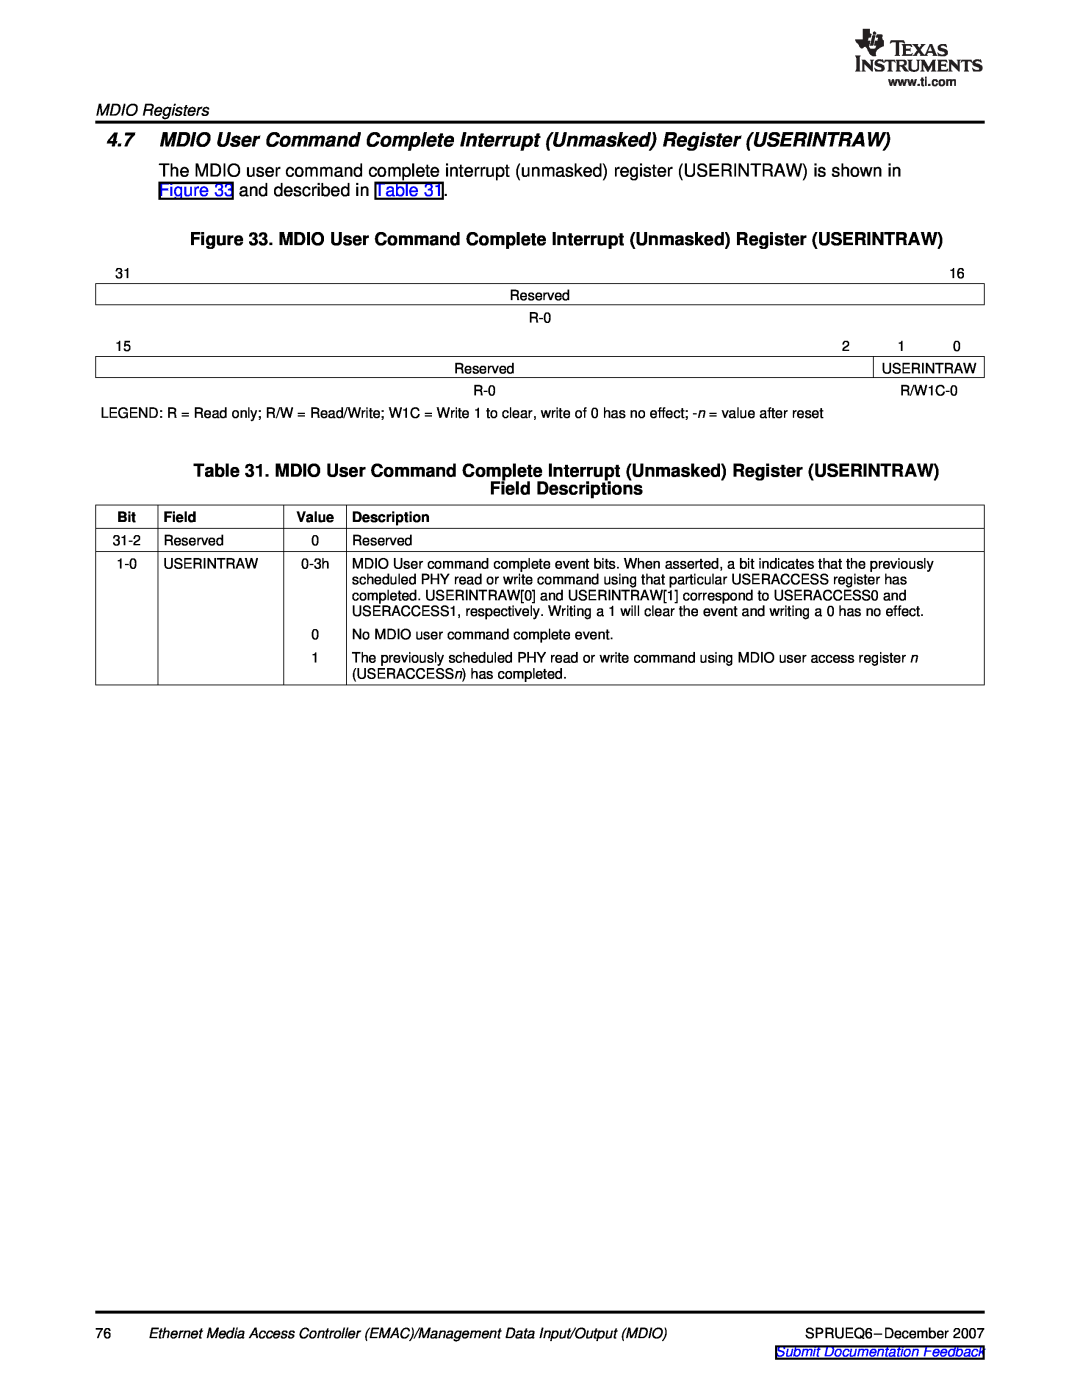 Texas Instruments TMS320DM646x manual MDIO User Command Complete Interrupt Unmasked Register USERINTRAW, Field Descriptions 